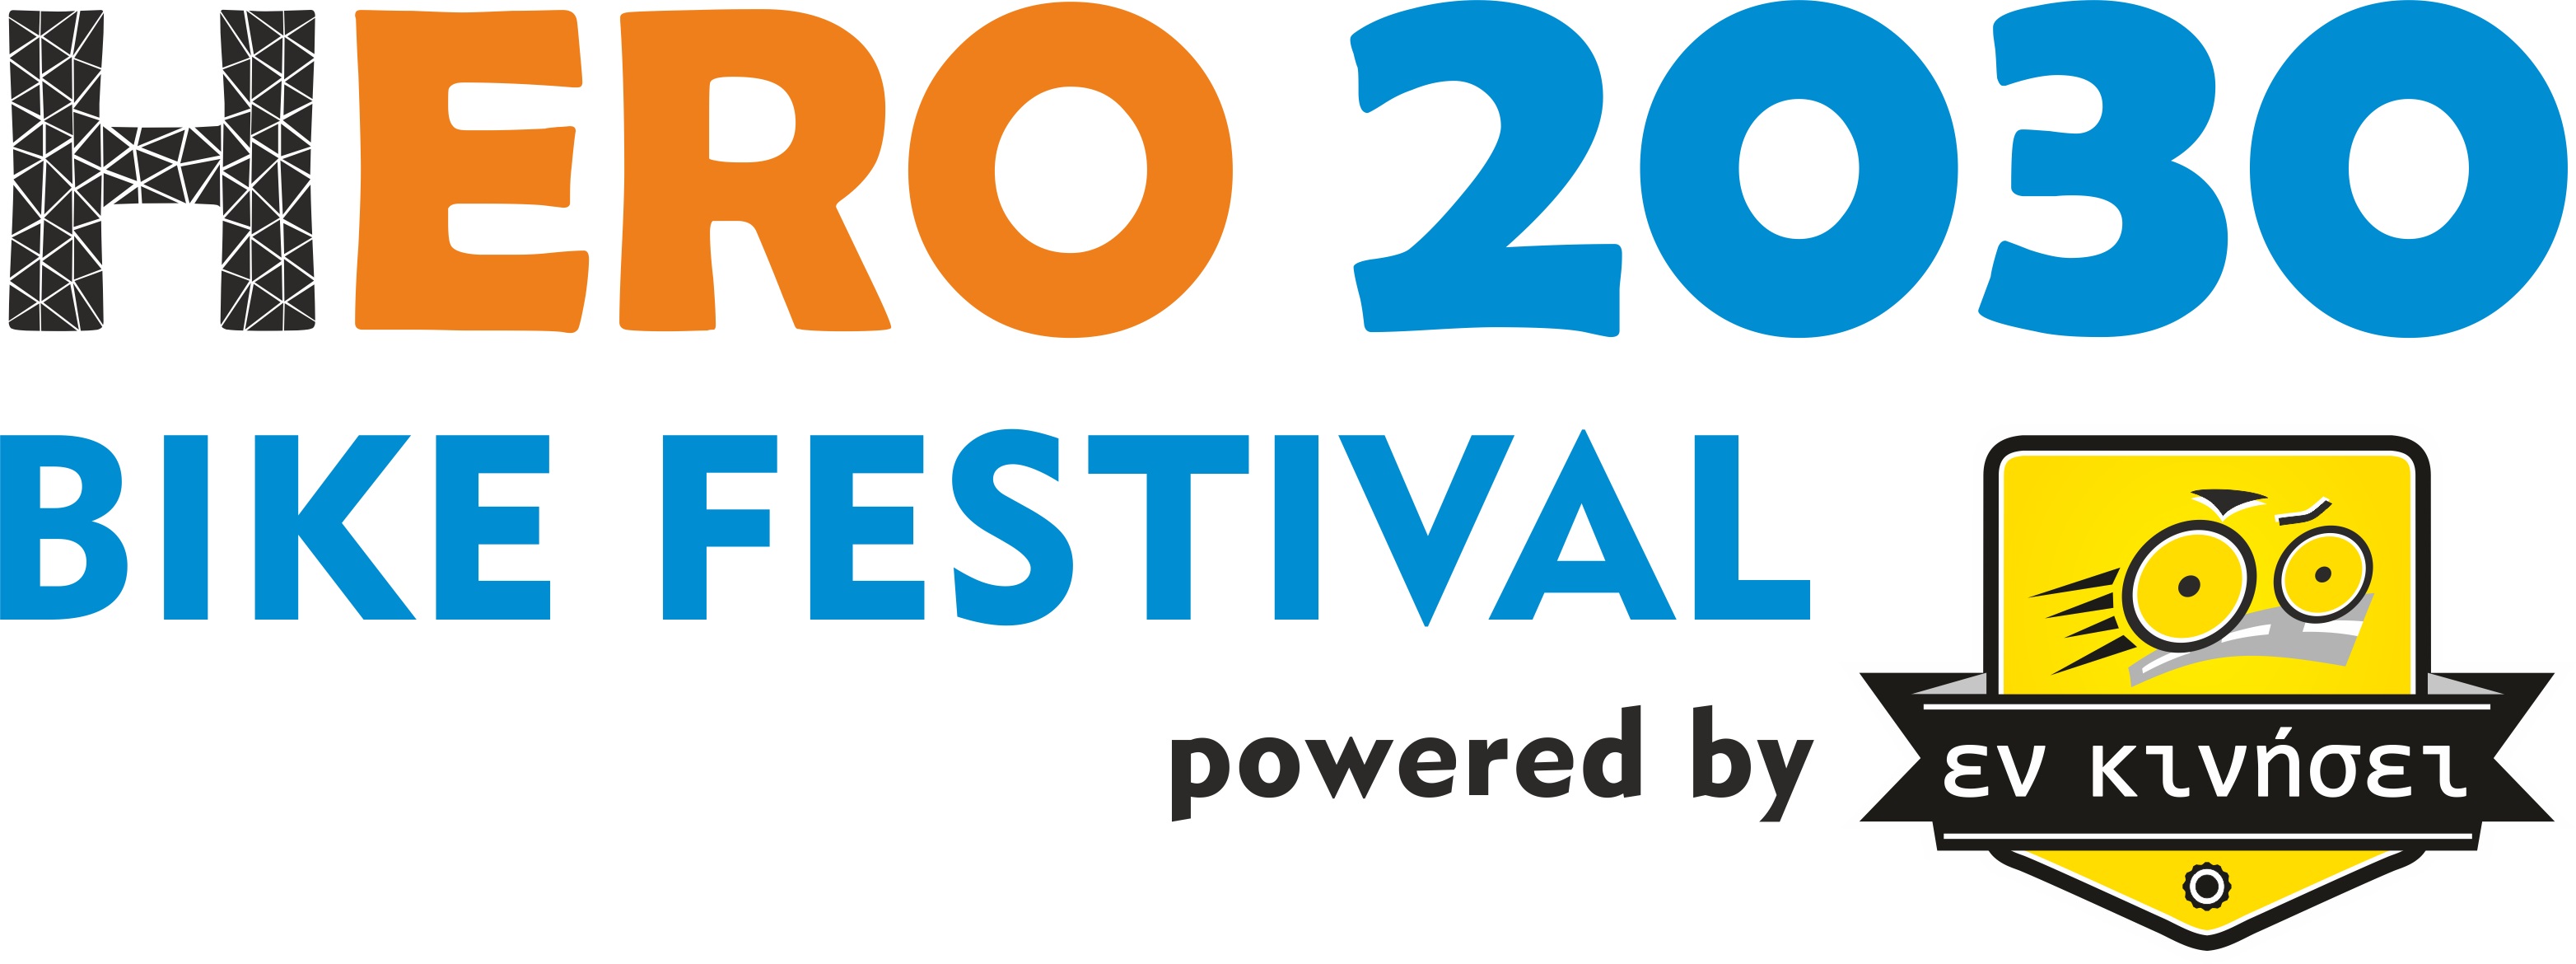 HERO_2030_logo